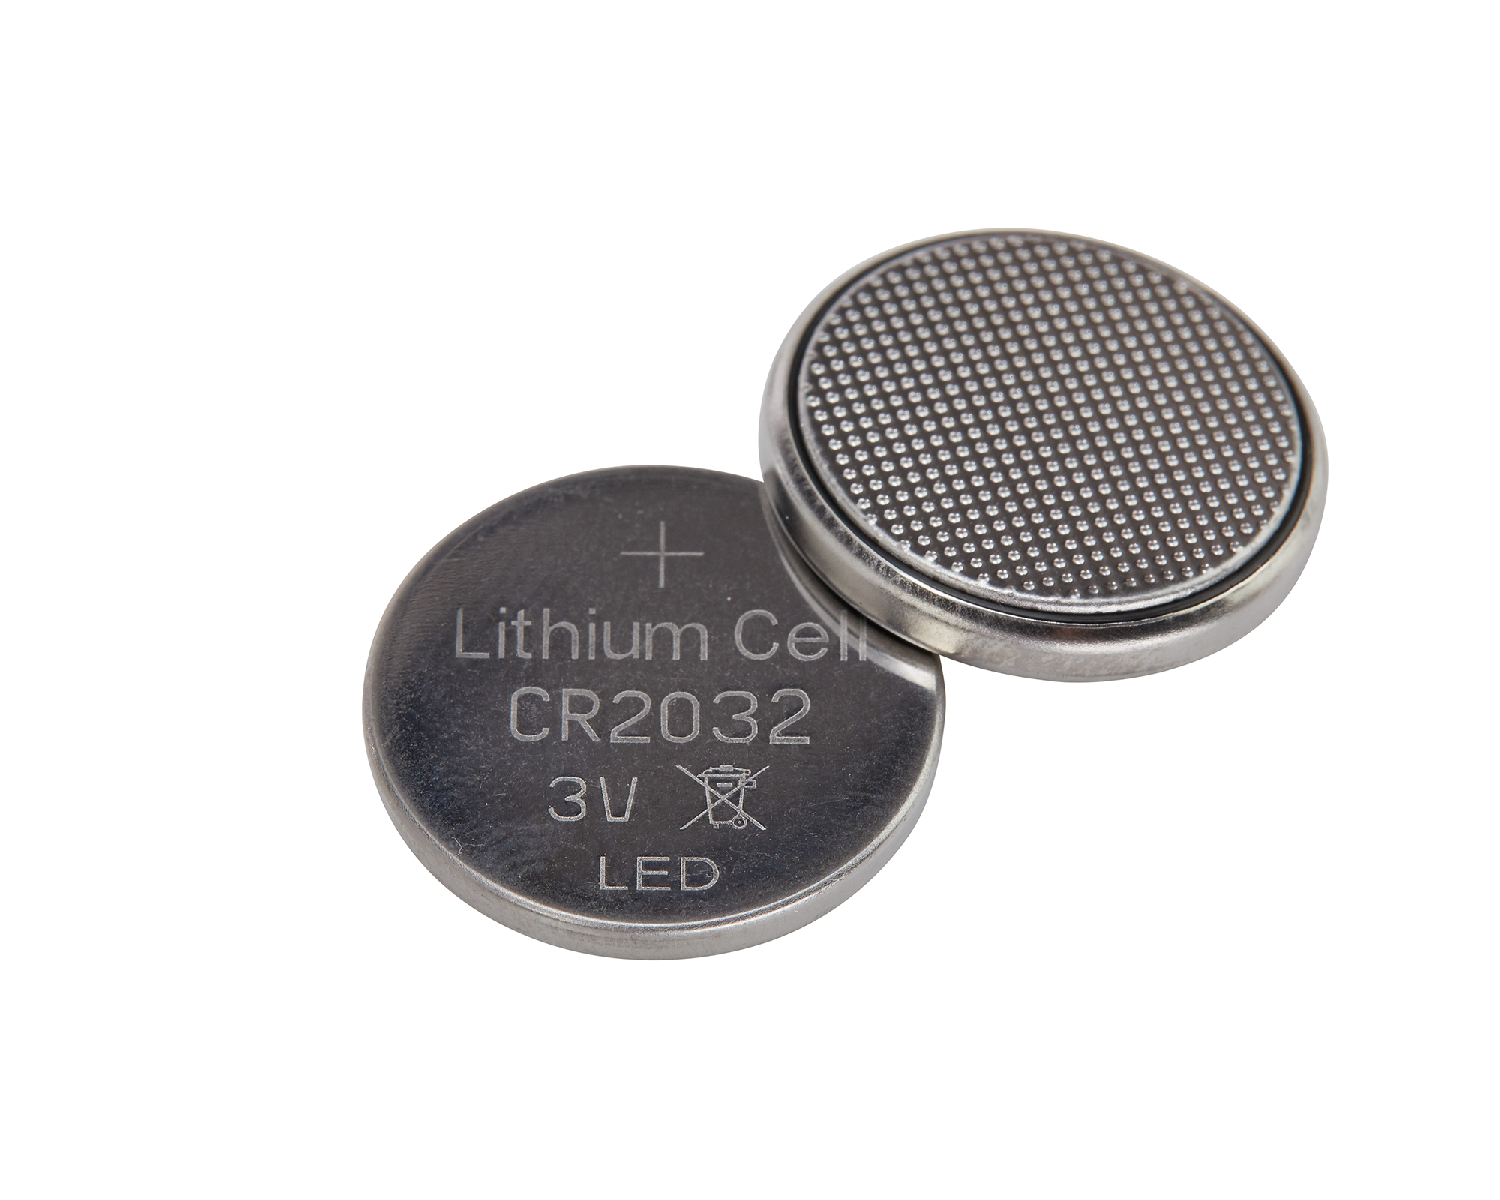 Cr2032 batteries. Lithium Battery cr2032 3v. Батарейка таблетка 3v cr2032. Батарейка cr2032 (3v). Батарейки Lithium Cell cr2032 3v.